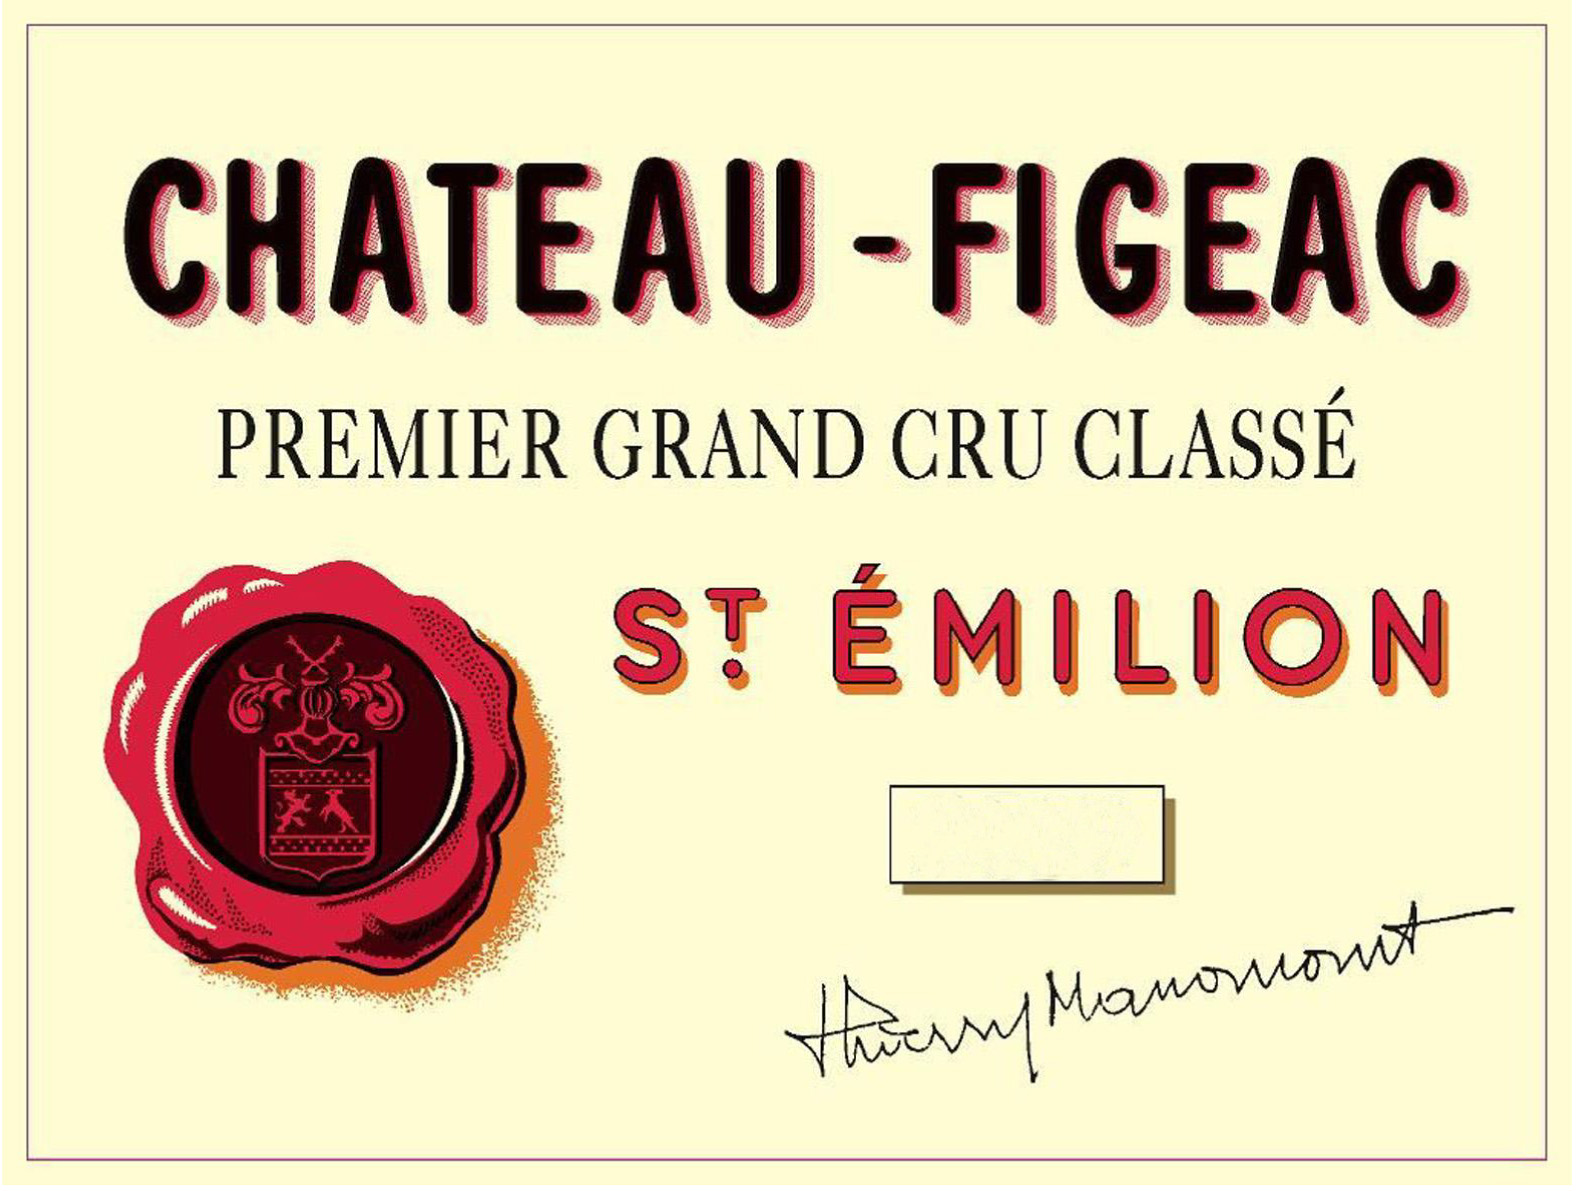 Chateau Figeac label